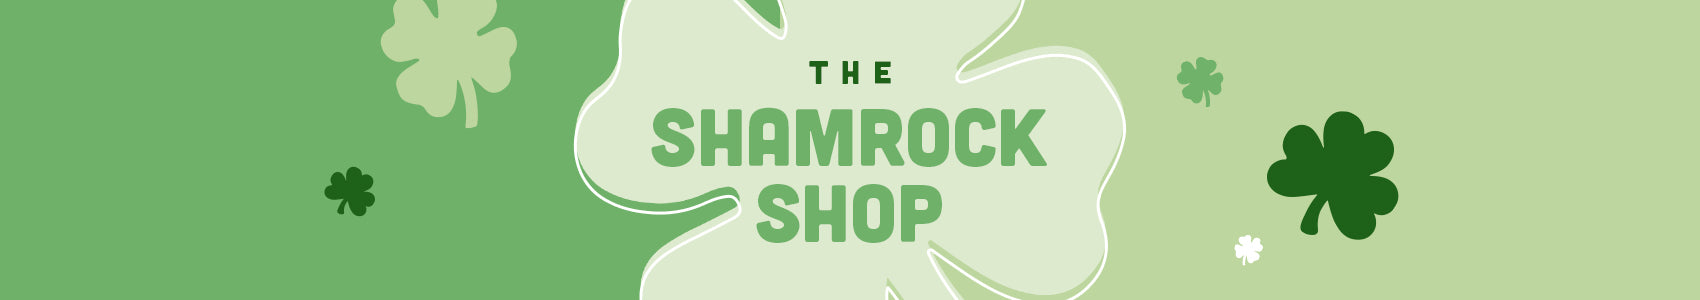 The Shamrock Shop